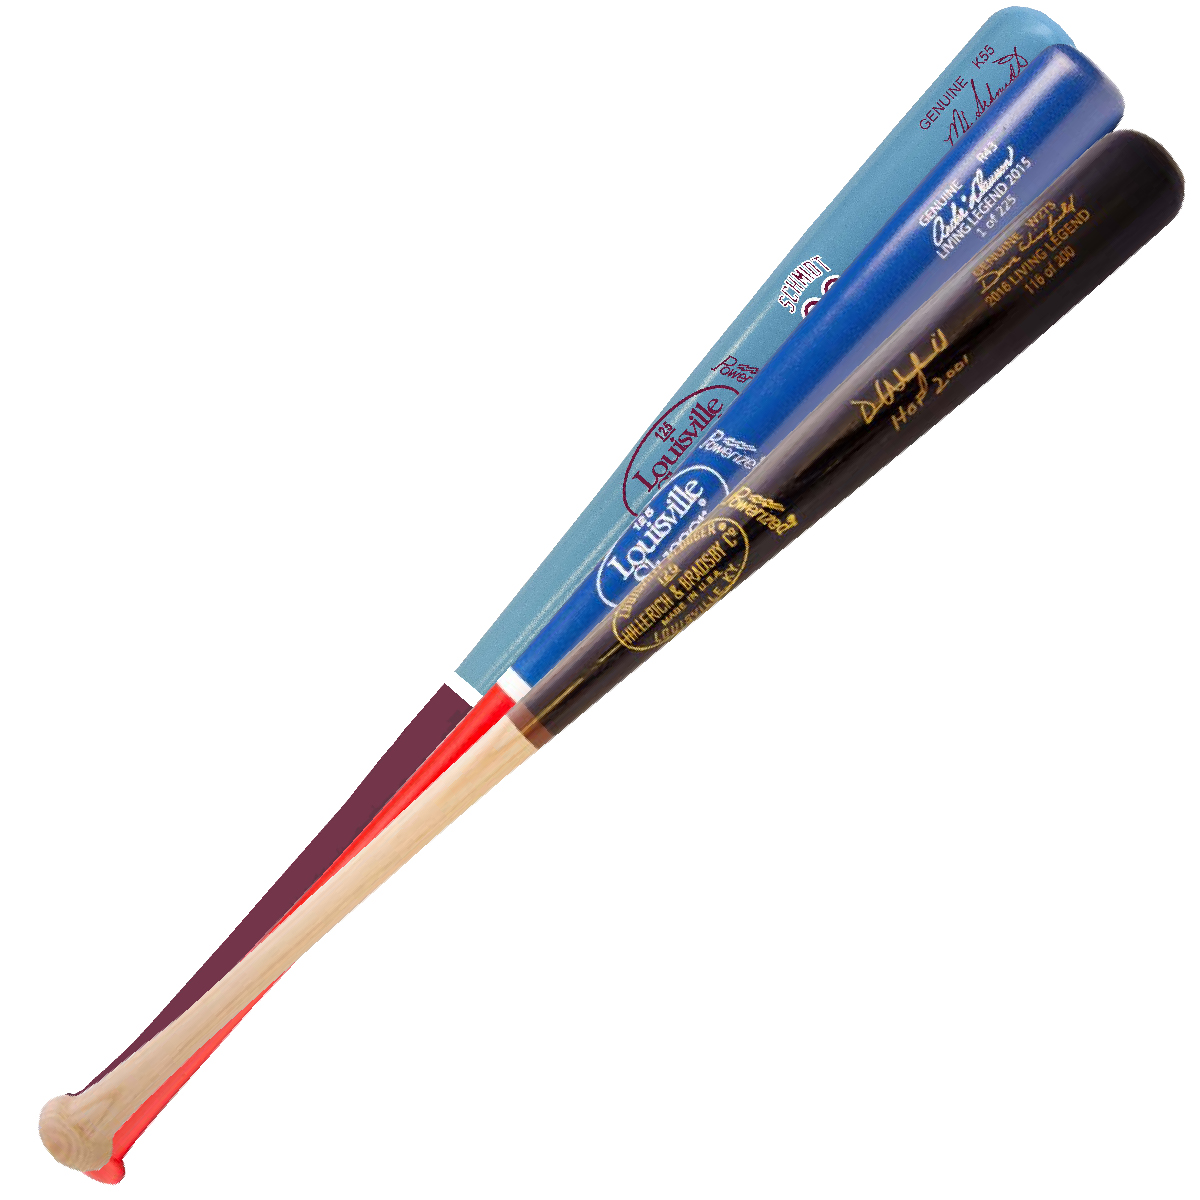 Louisville slugger baseball bat Dave Winfield, K55